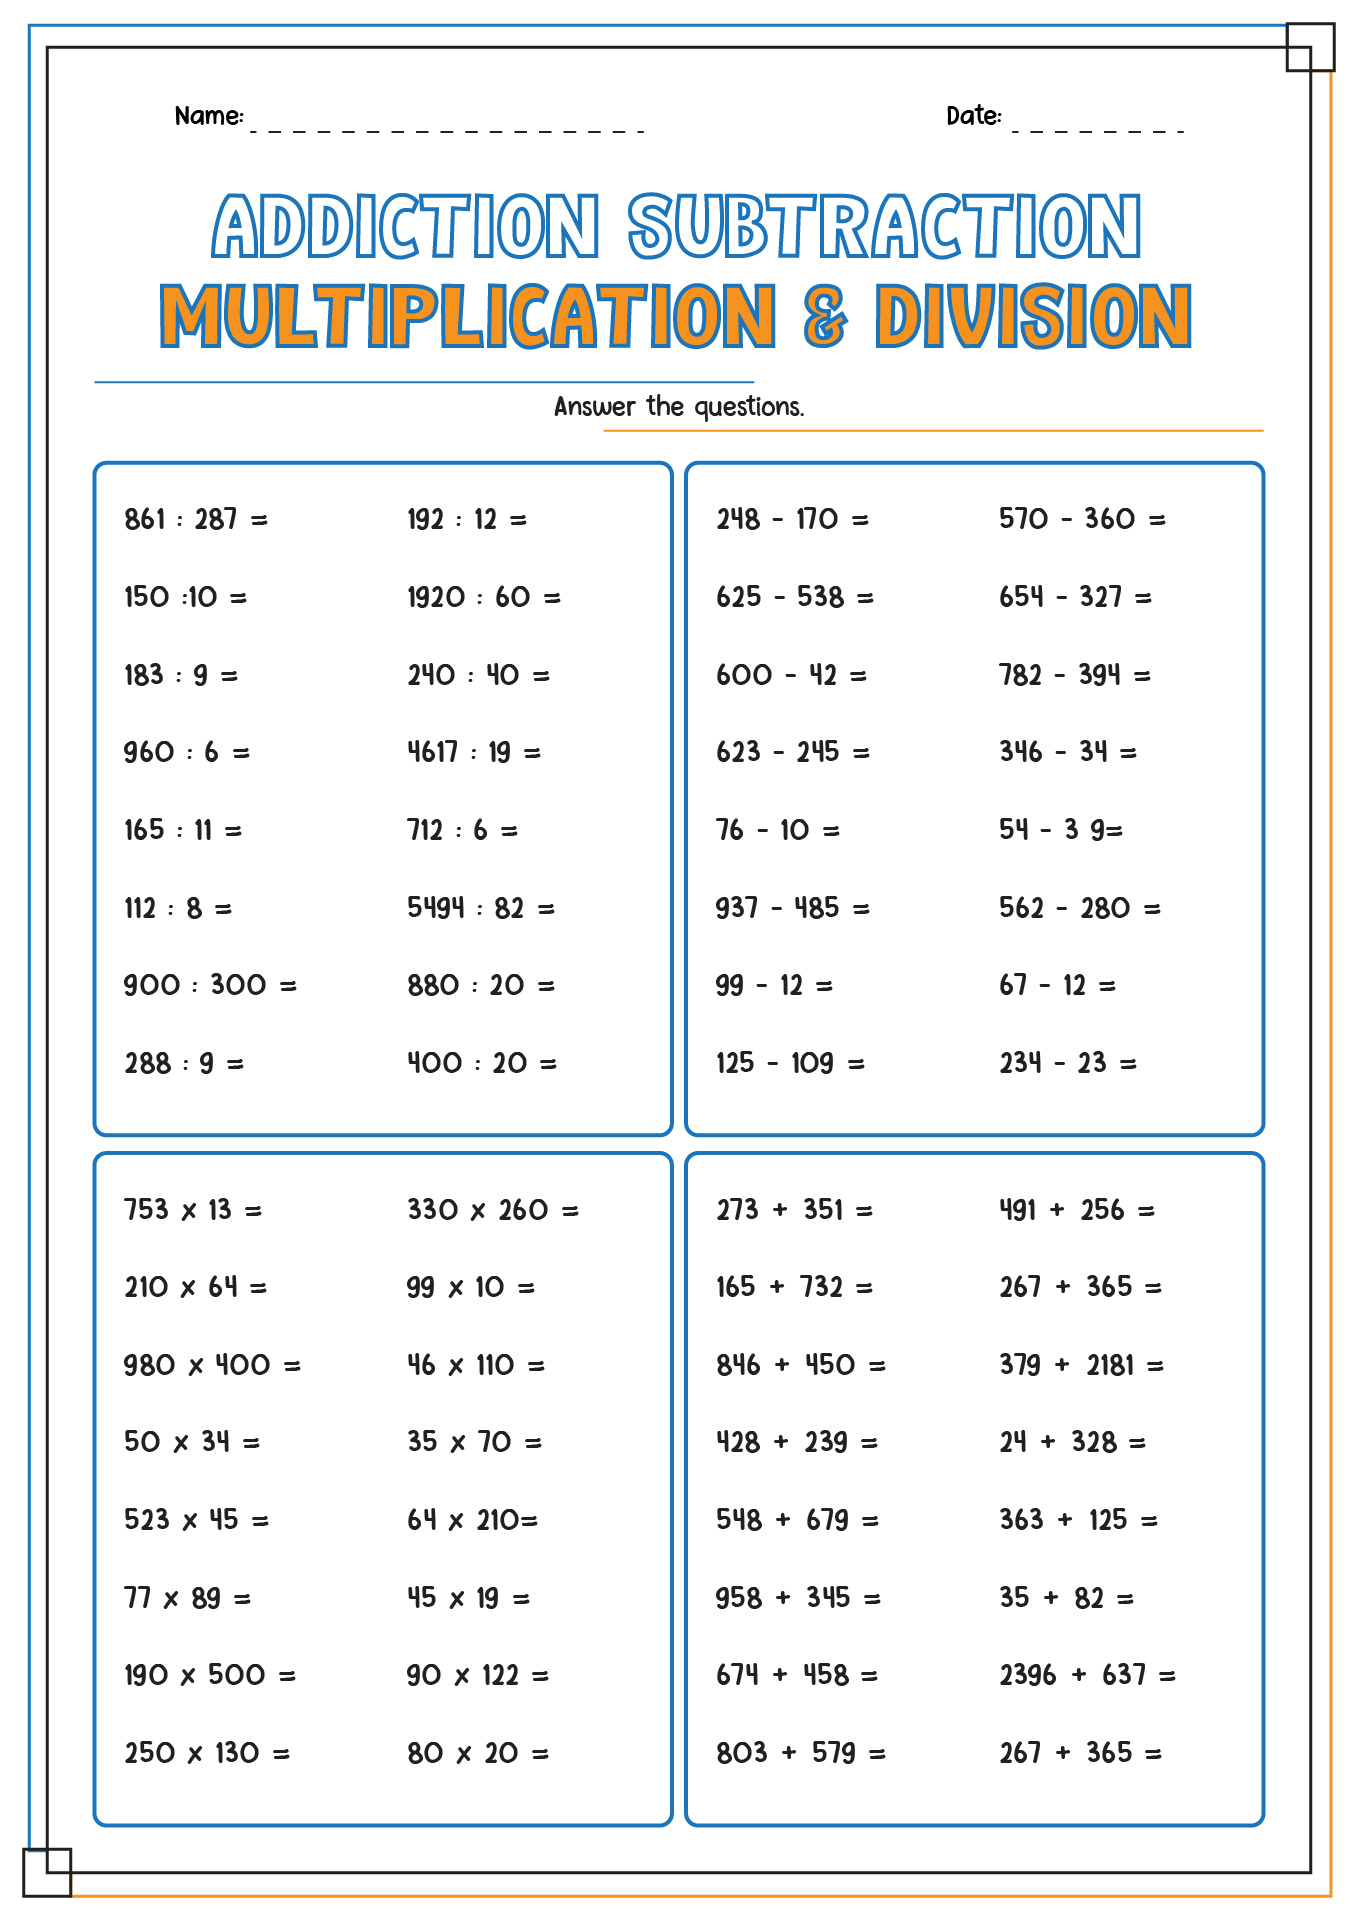 multiple-digit-multiplication-worksheets-math-multiplication